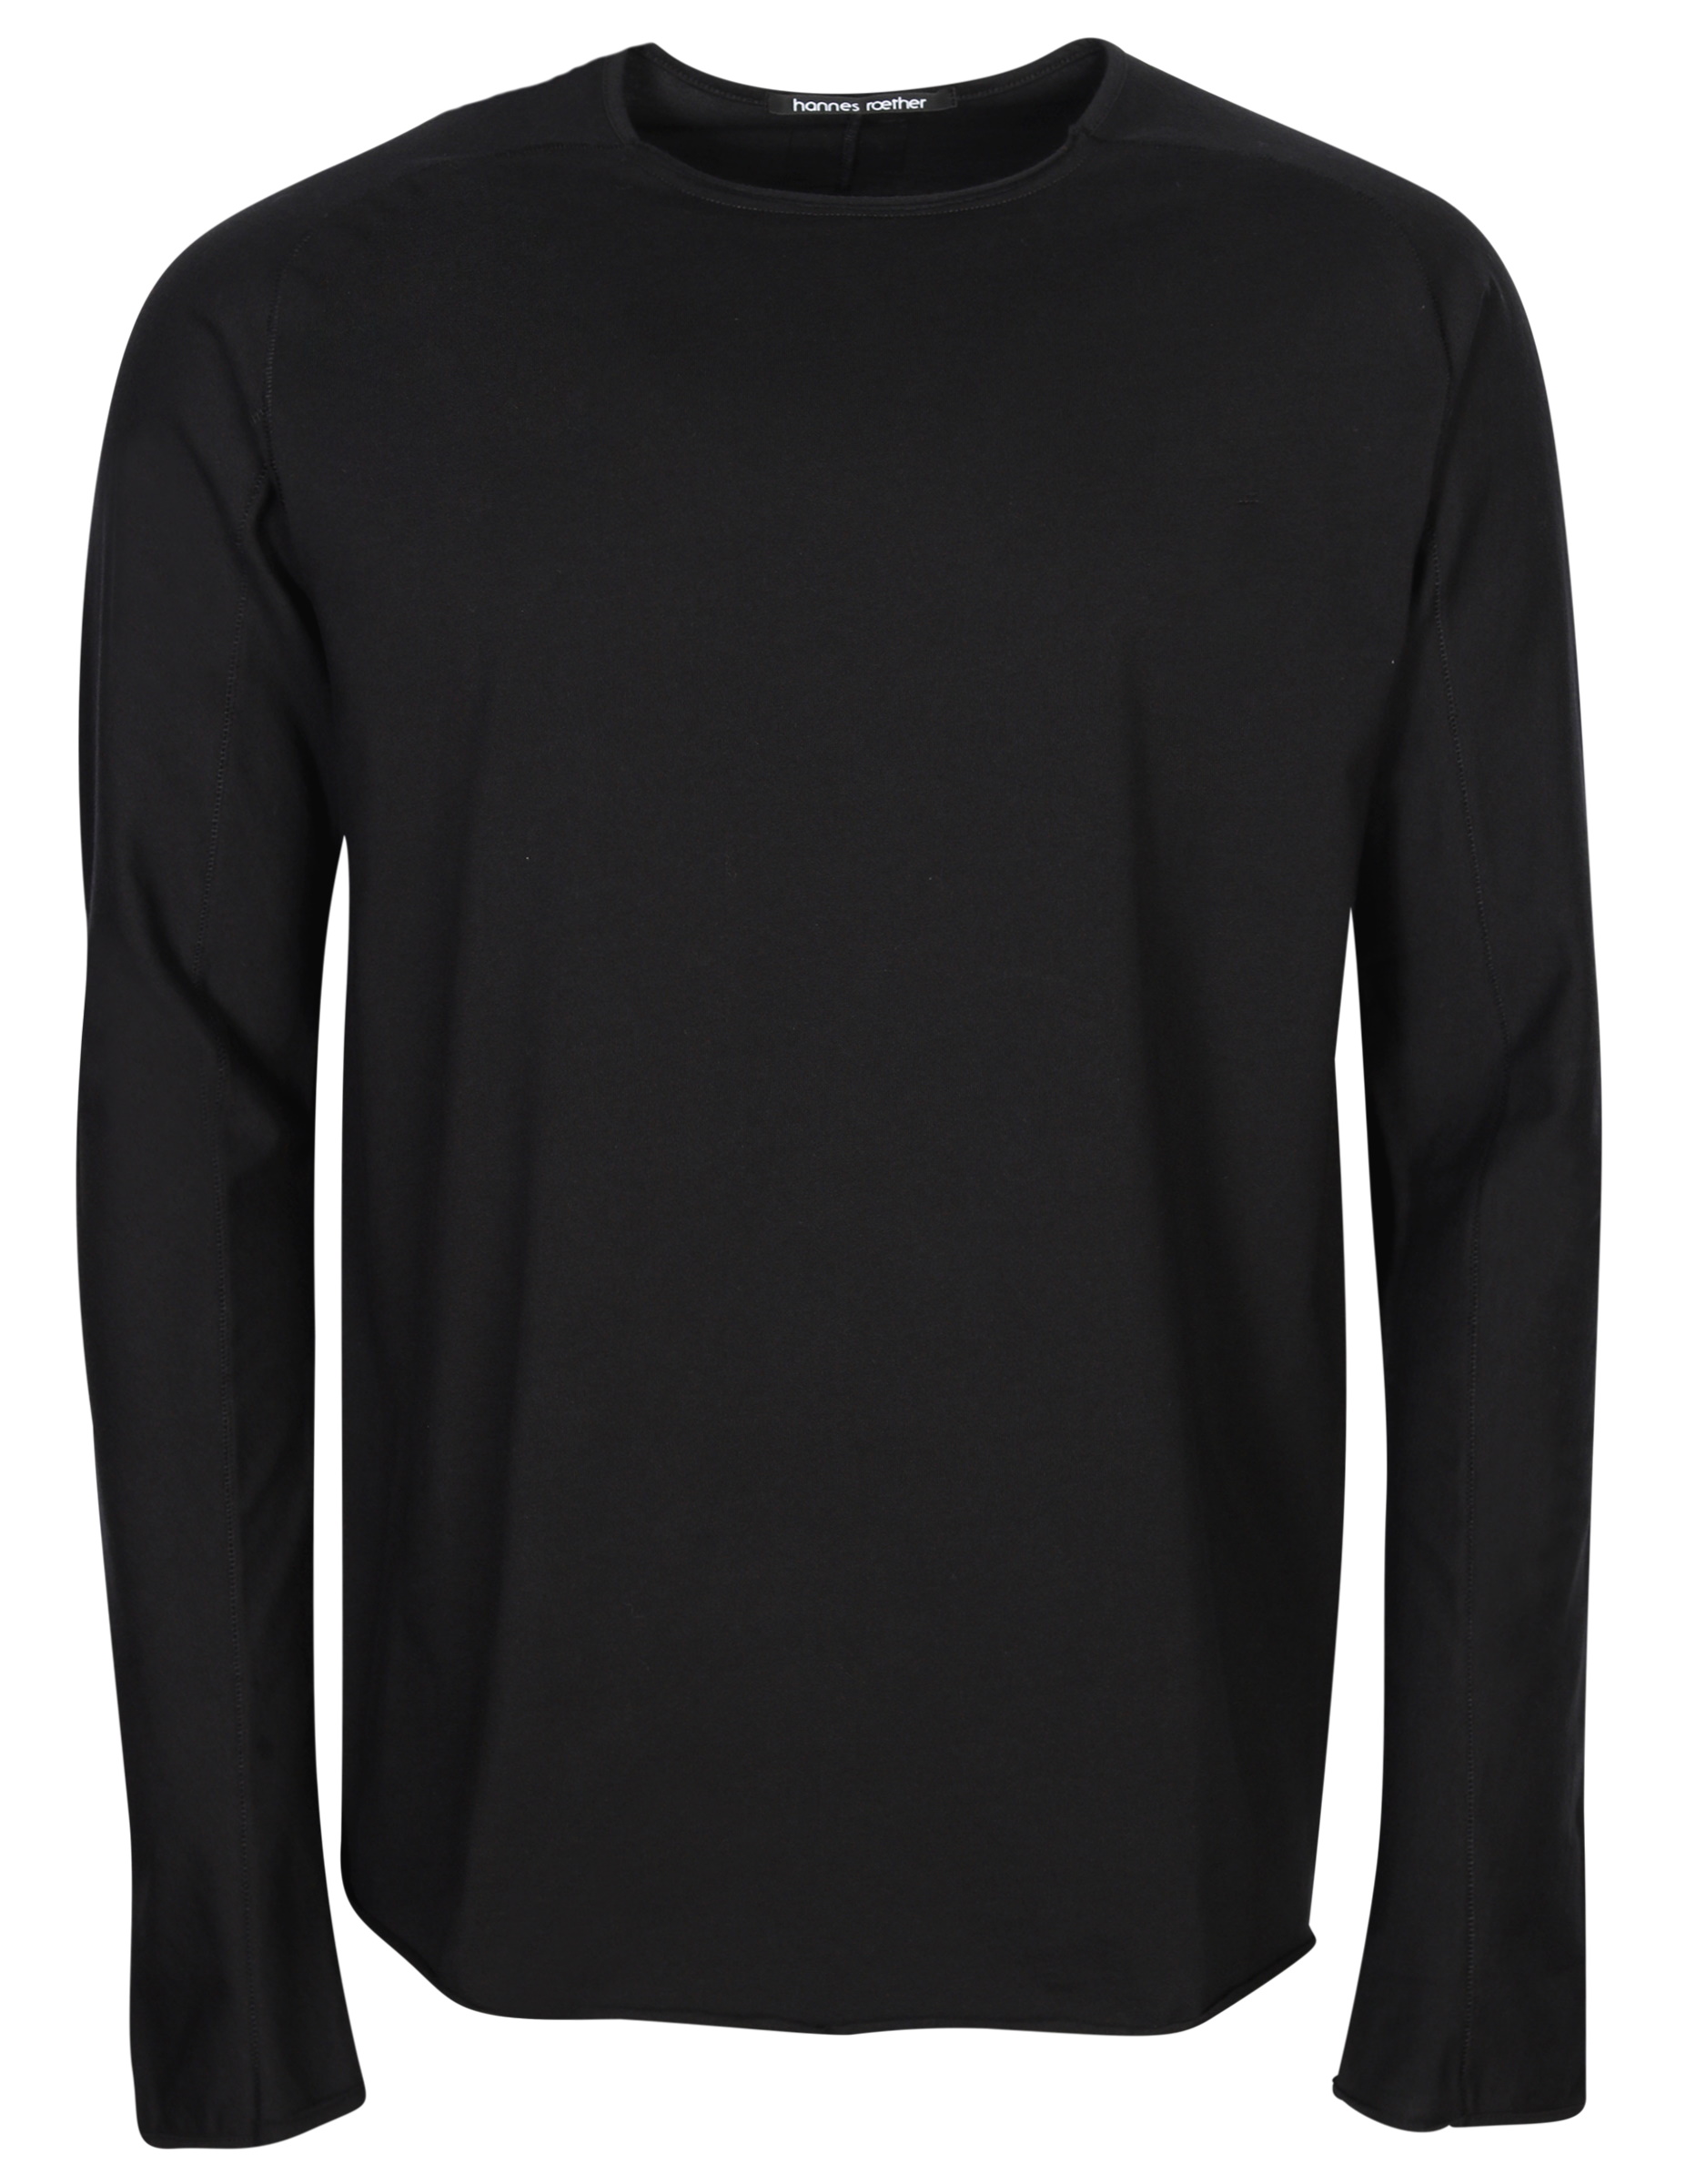 Hannes Roether Sweatshirt Black XL